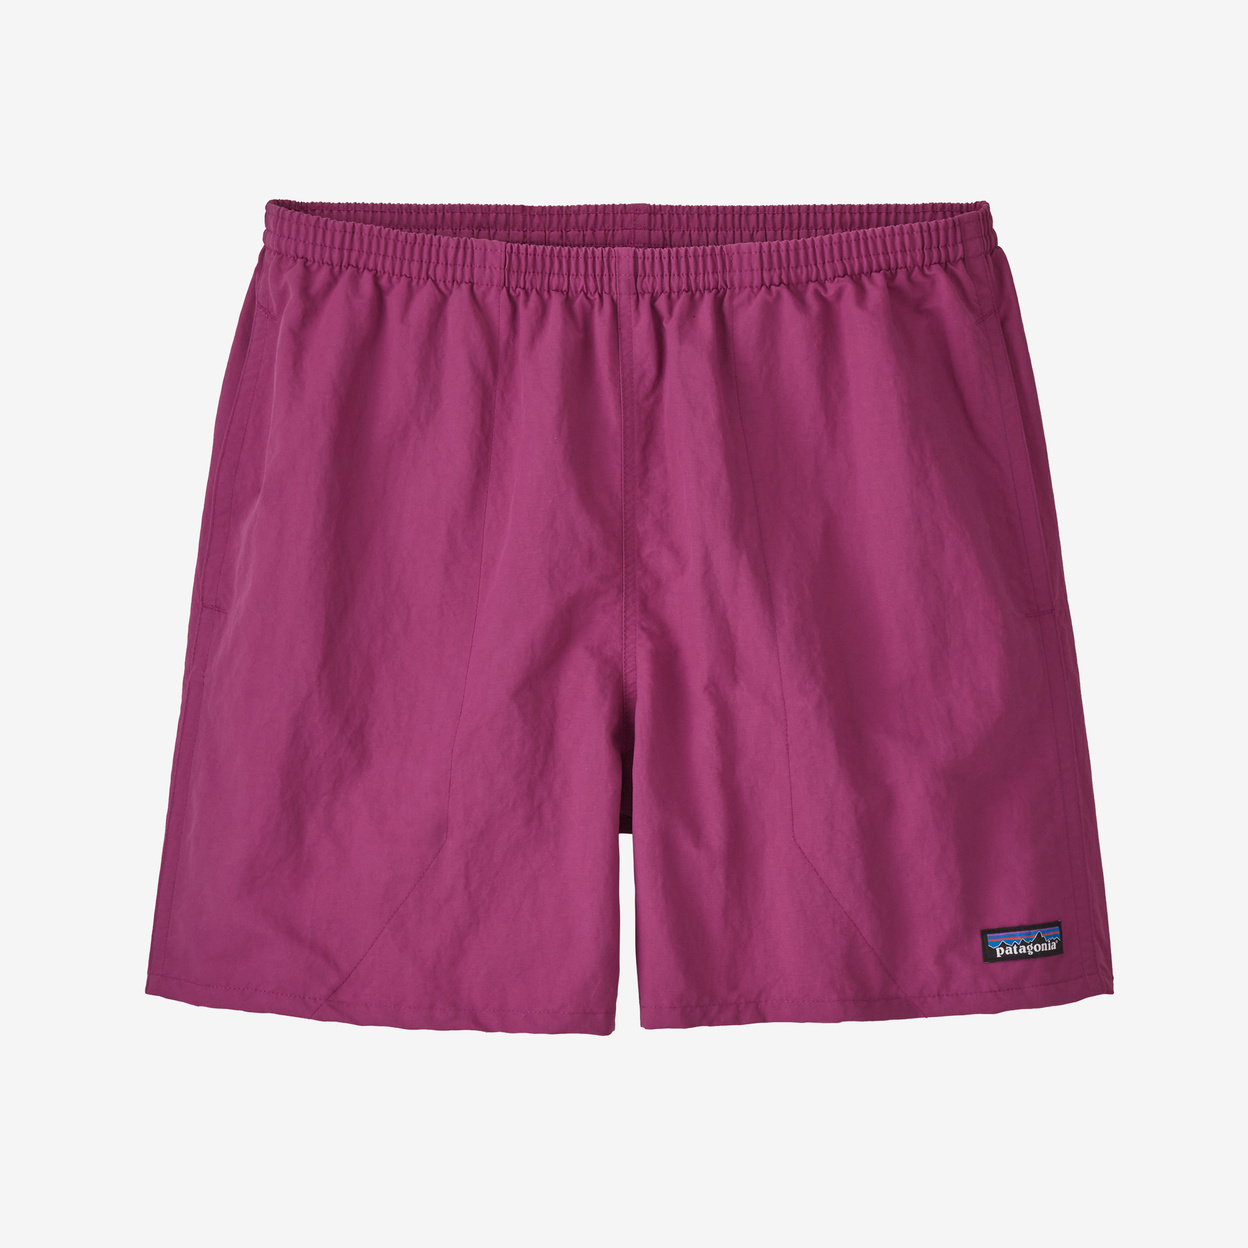 Patagonia Men's Baggies™ Shorts - 5